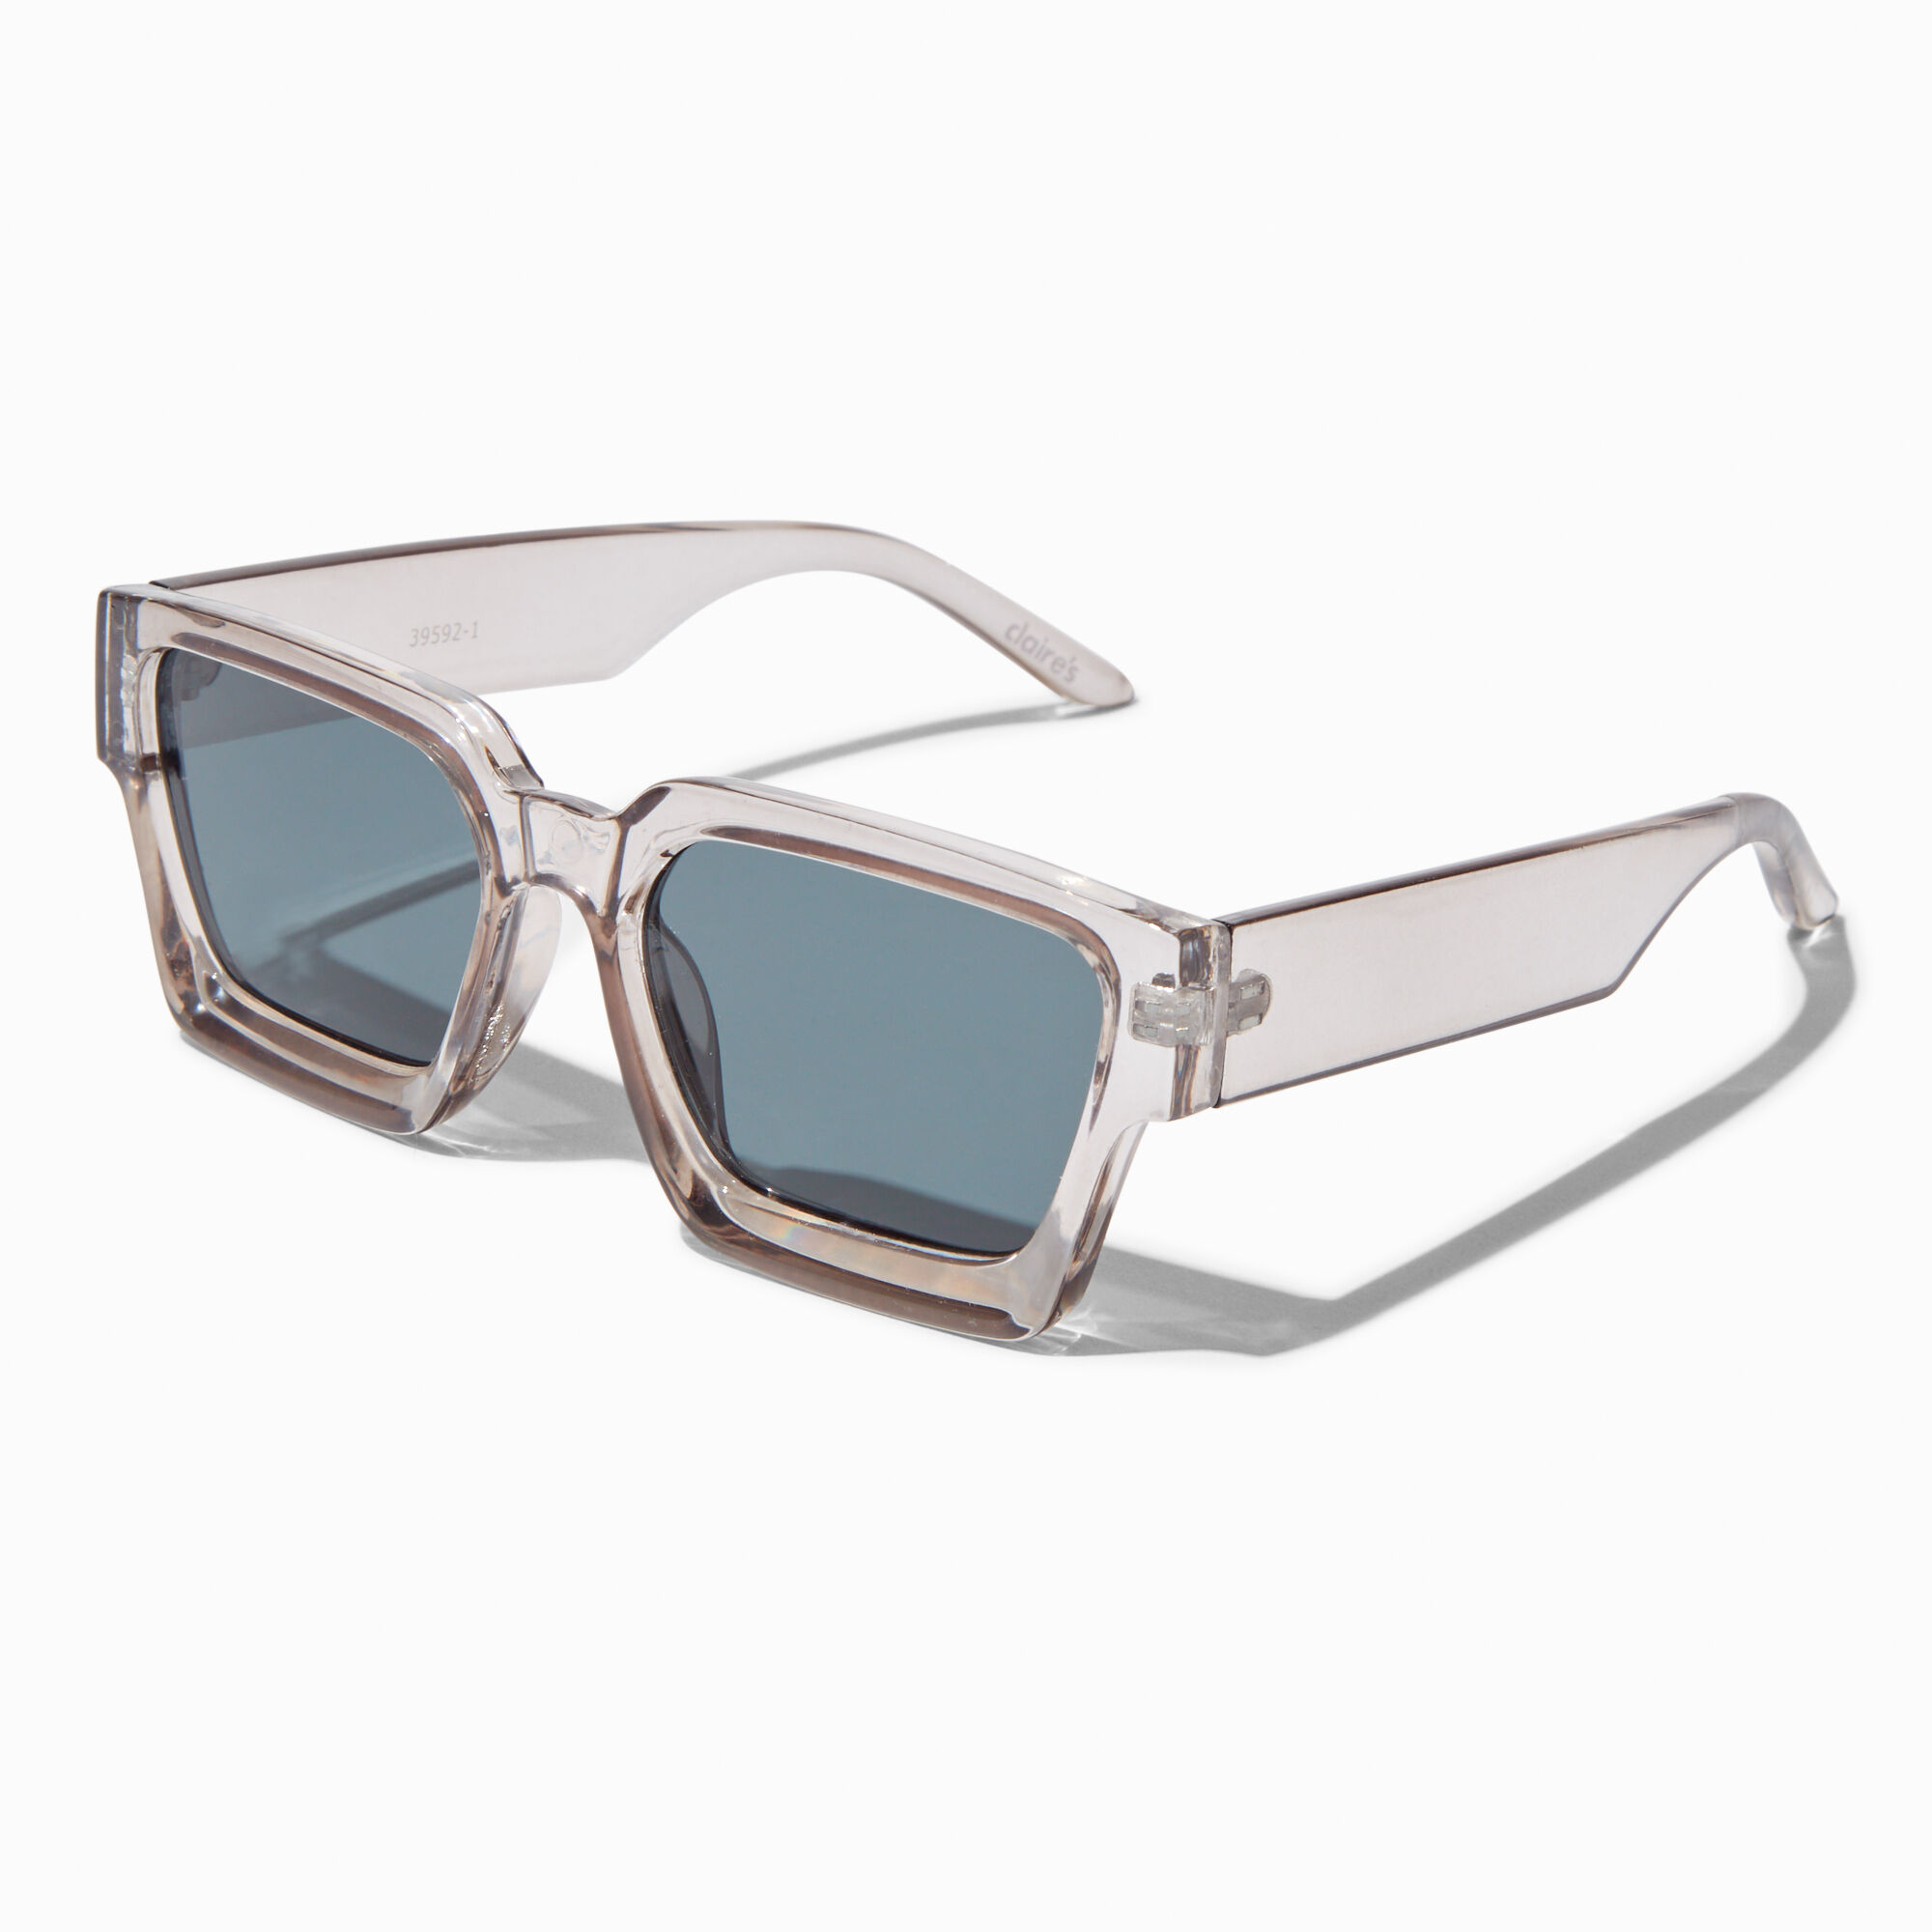 View Claires Translucent Smoke Rectangular Sunglasses Gray information